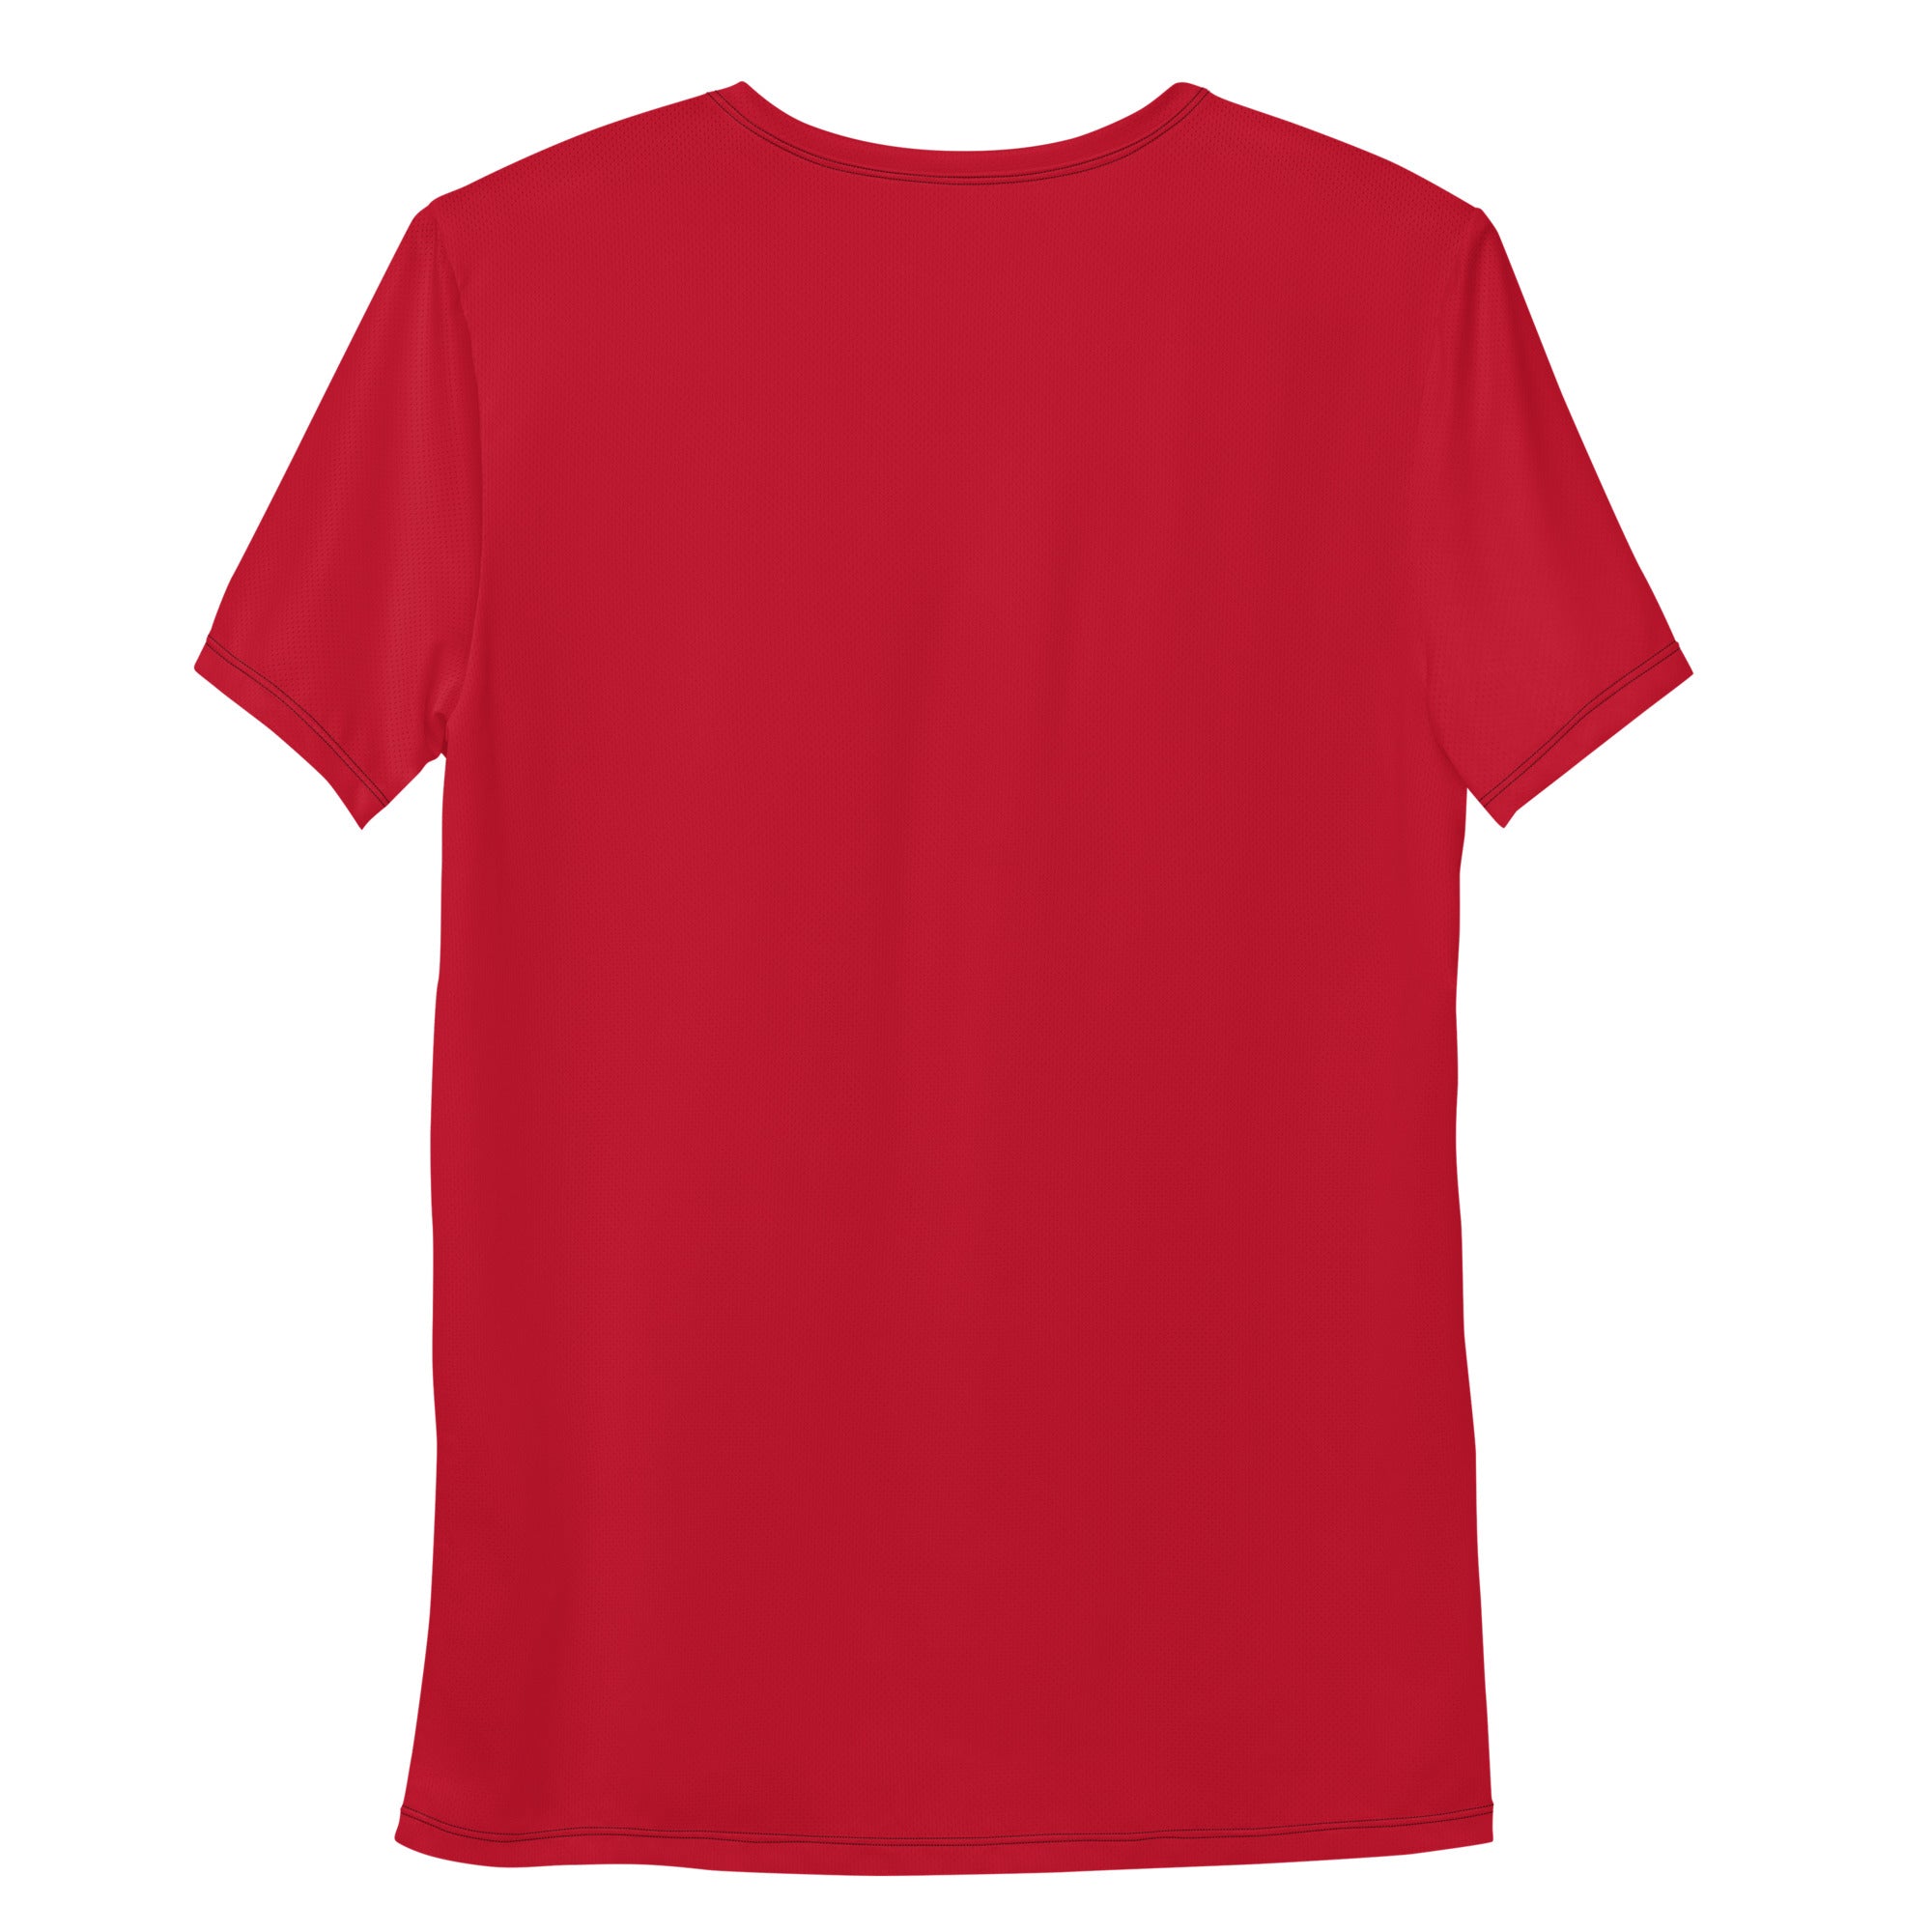 Knockouts Performance Short Sleeve Men's Athletic T-shirt